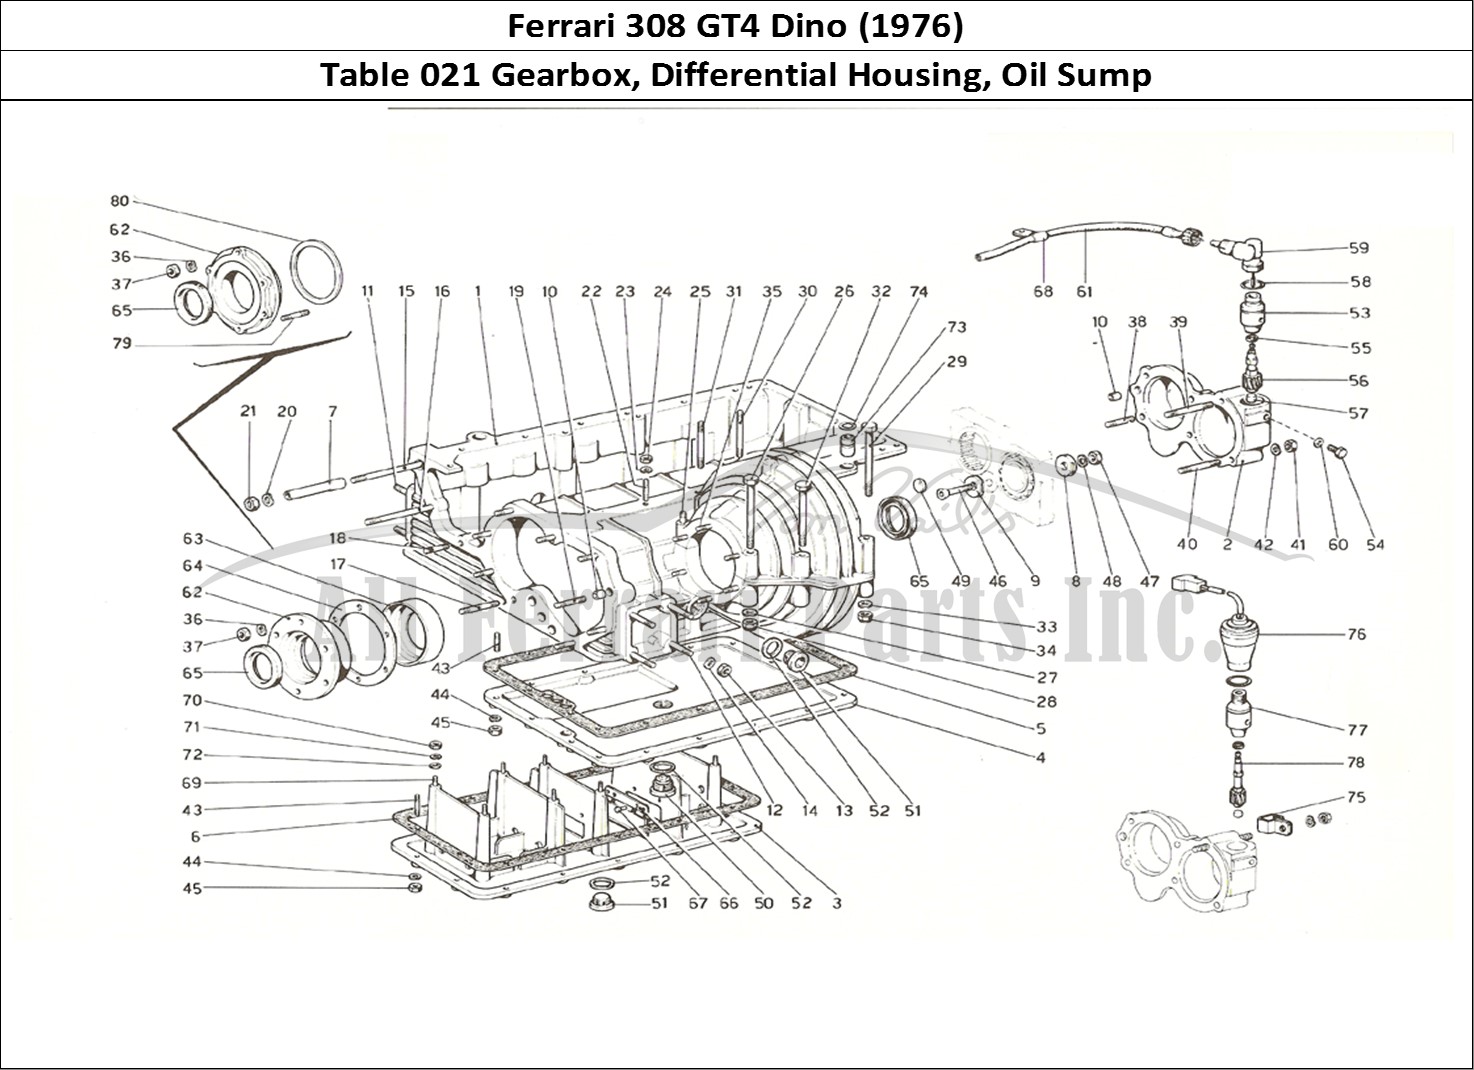 Ferrari Parts Ferrari 308 GT4 Dino (1976) Page 021 Gearbox - differential ho